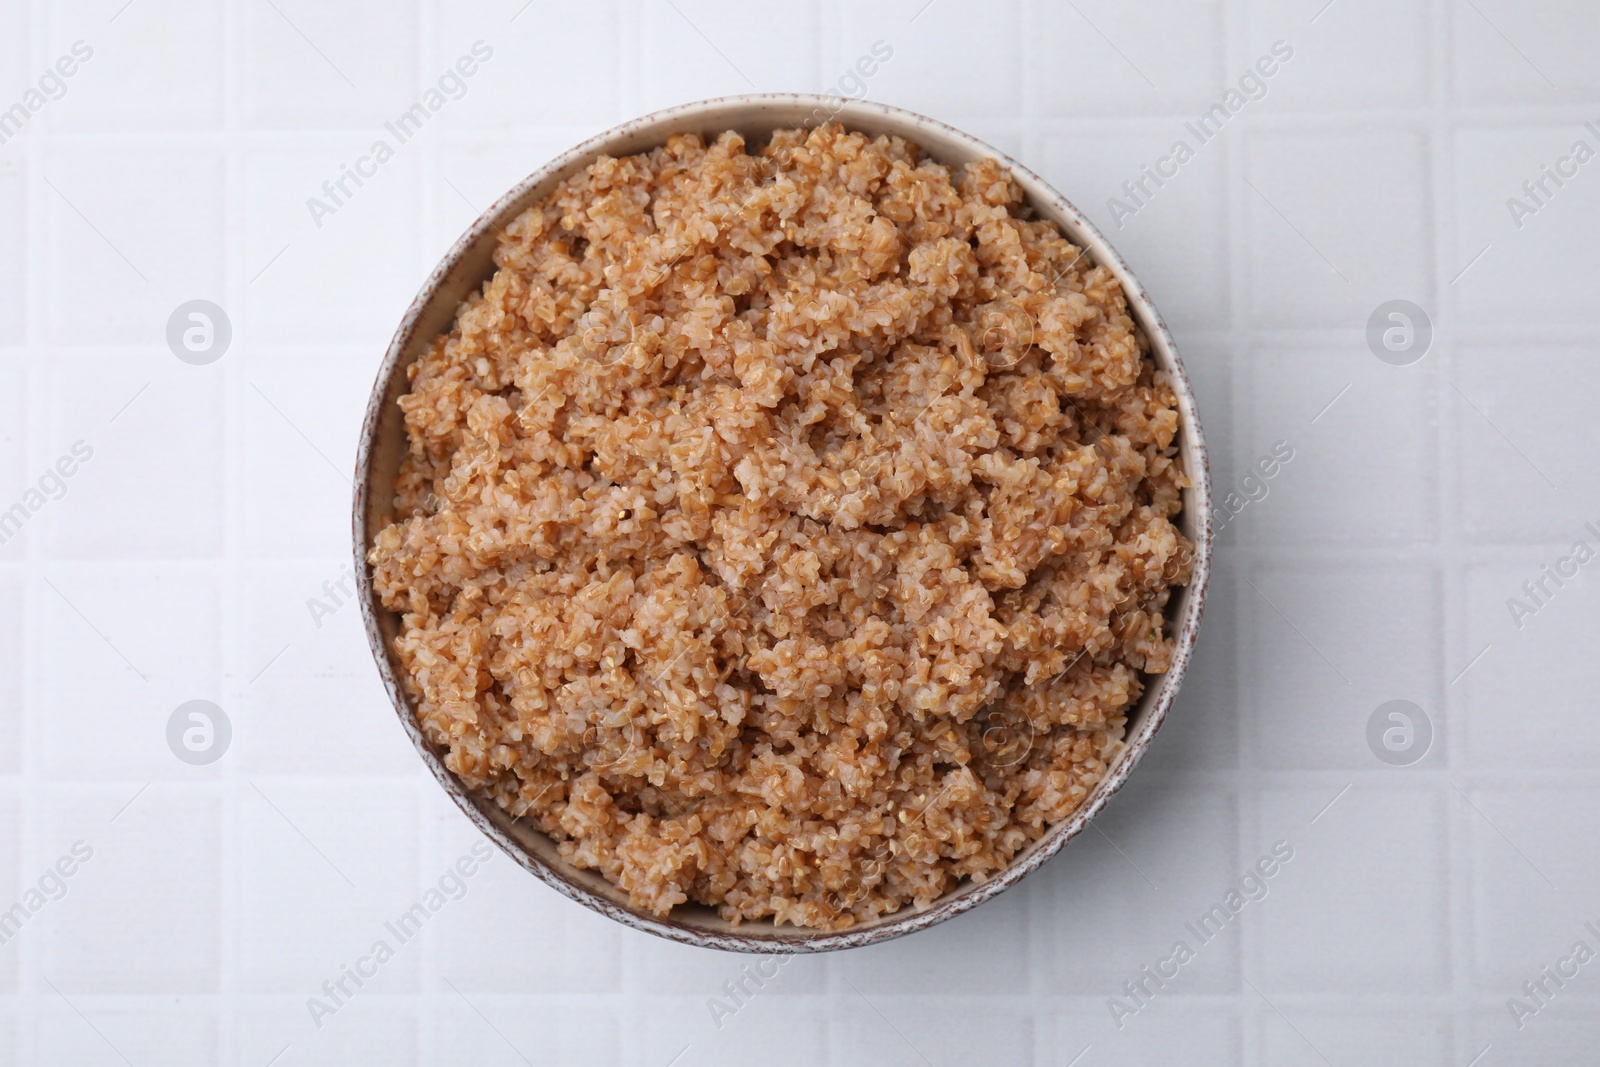 Photo of Tasty wheat porridge in bowl on white tiled table, top view